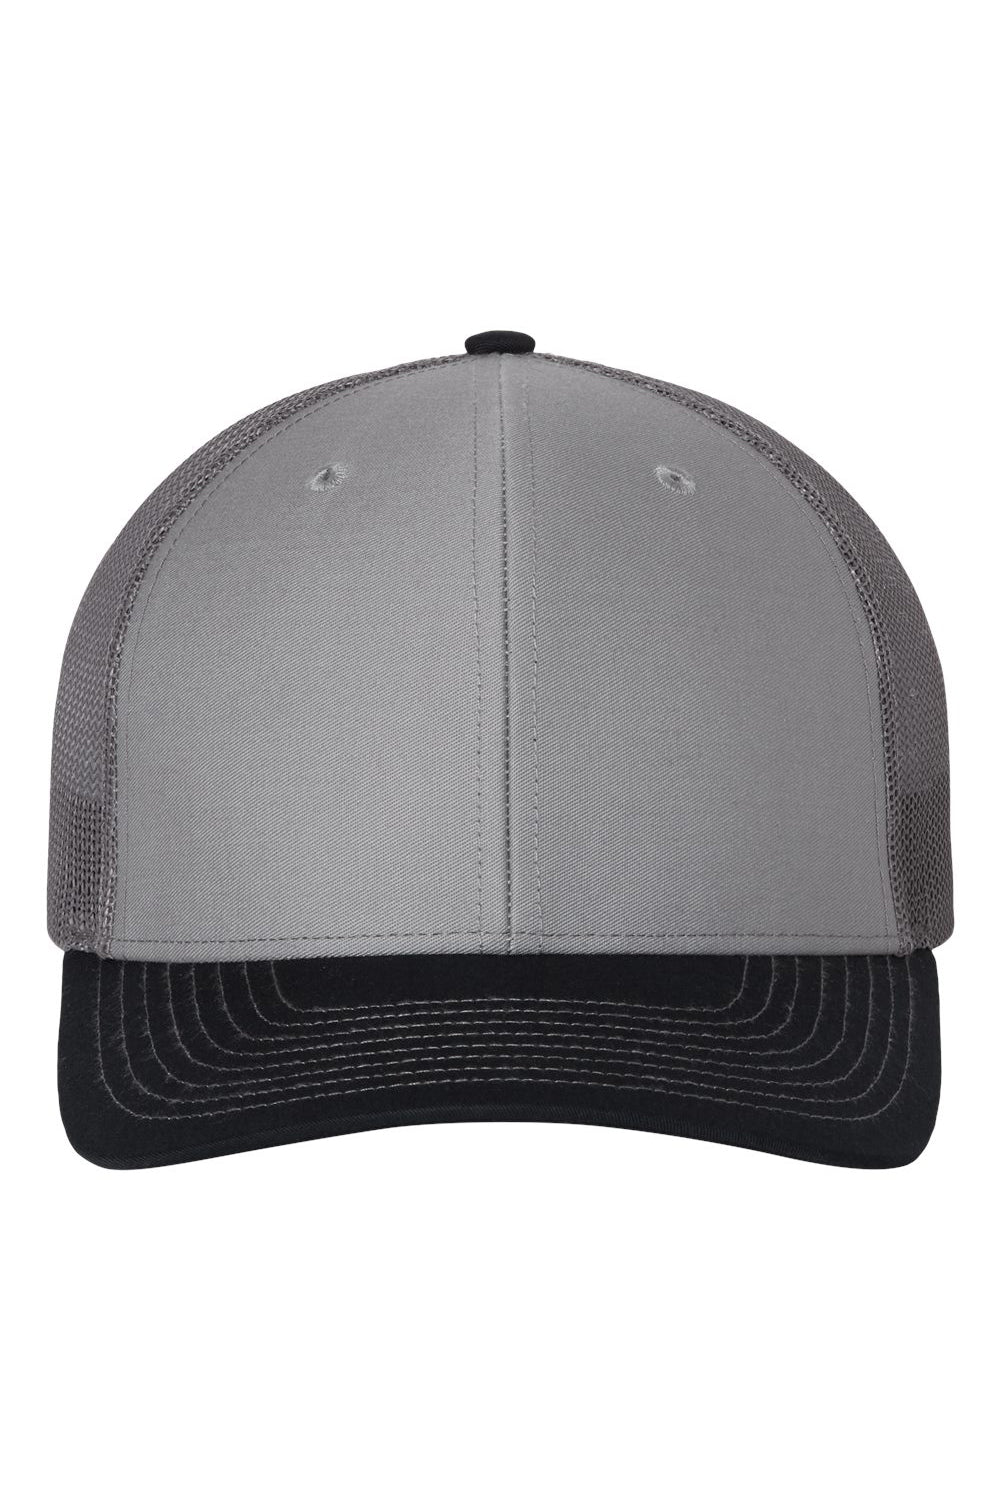 Richardson 112 Mens Snapback Trucker Hat Grey/Charcoal Grey/Navy Blue Flat Front